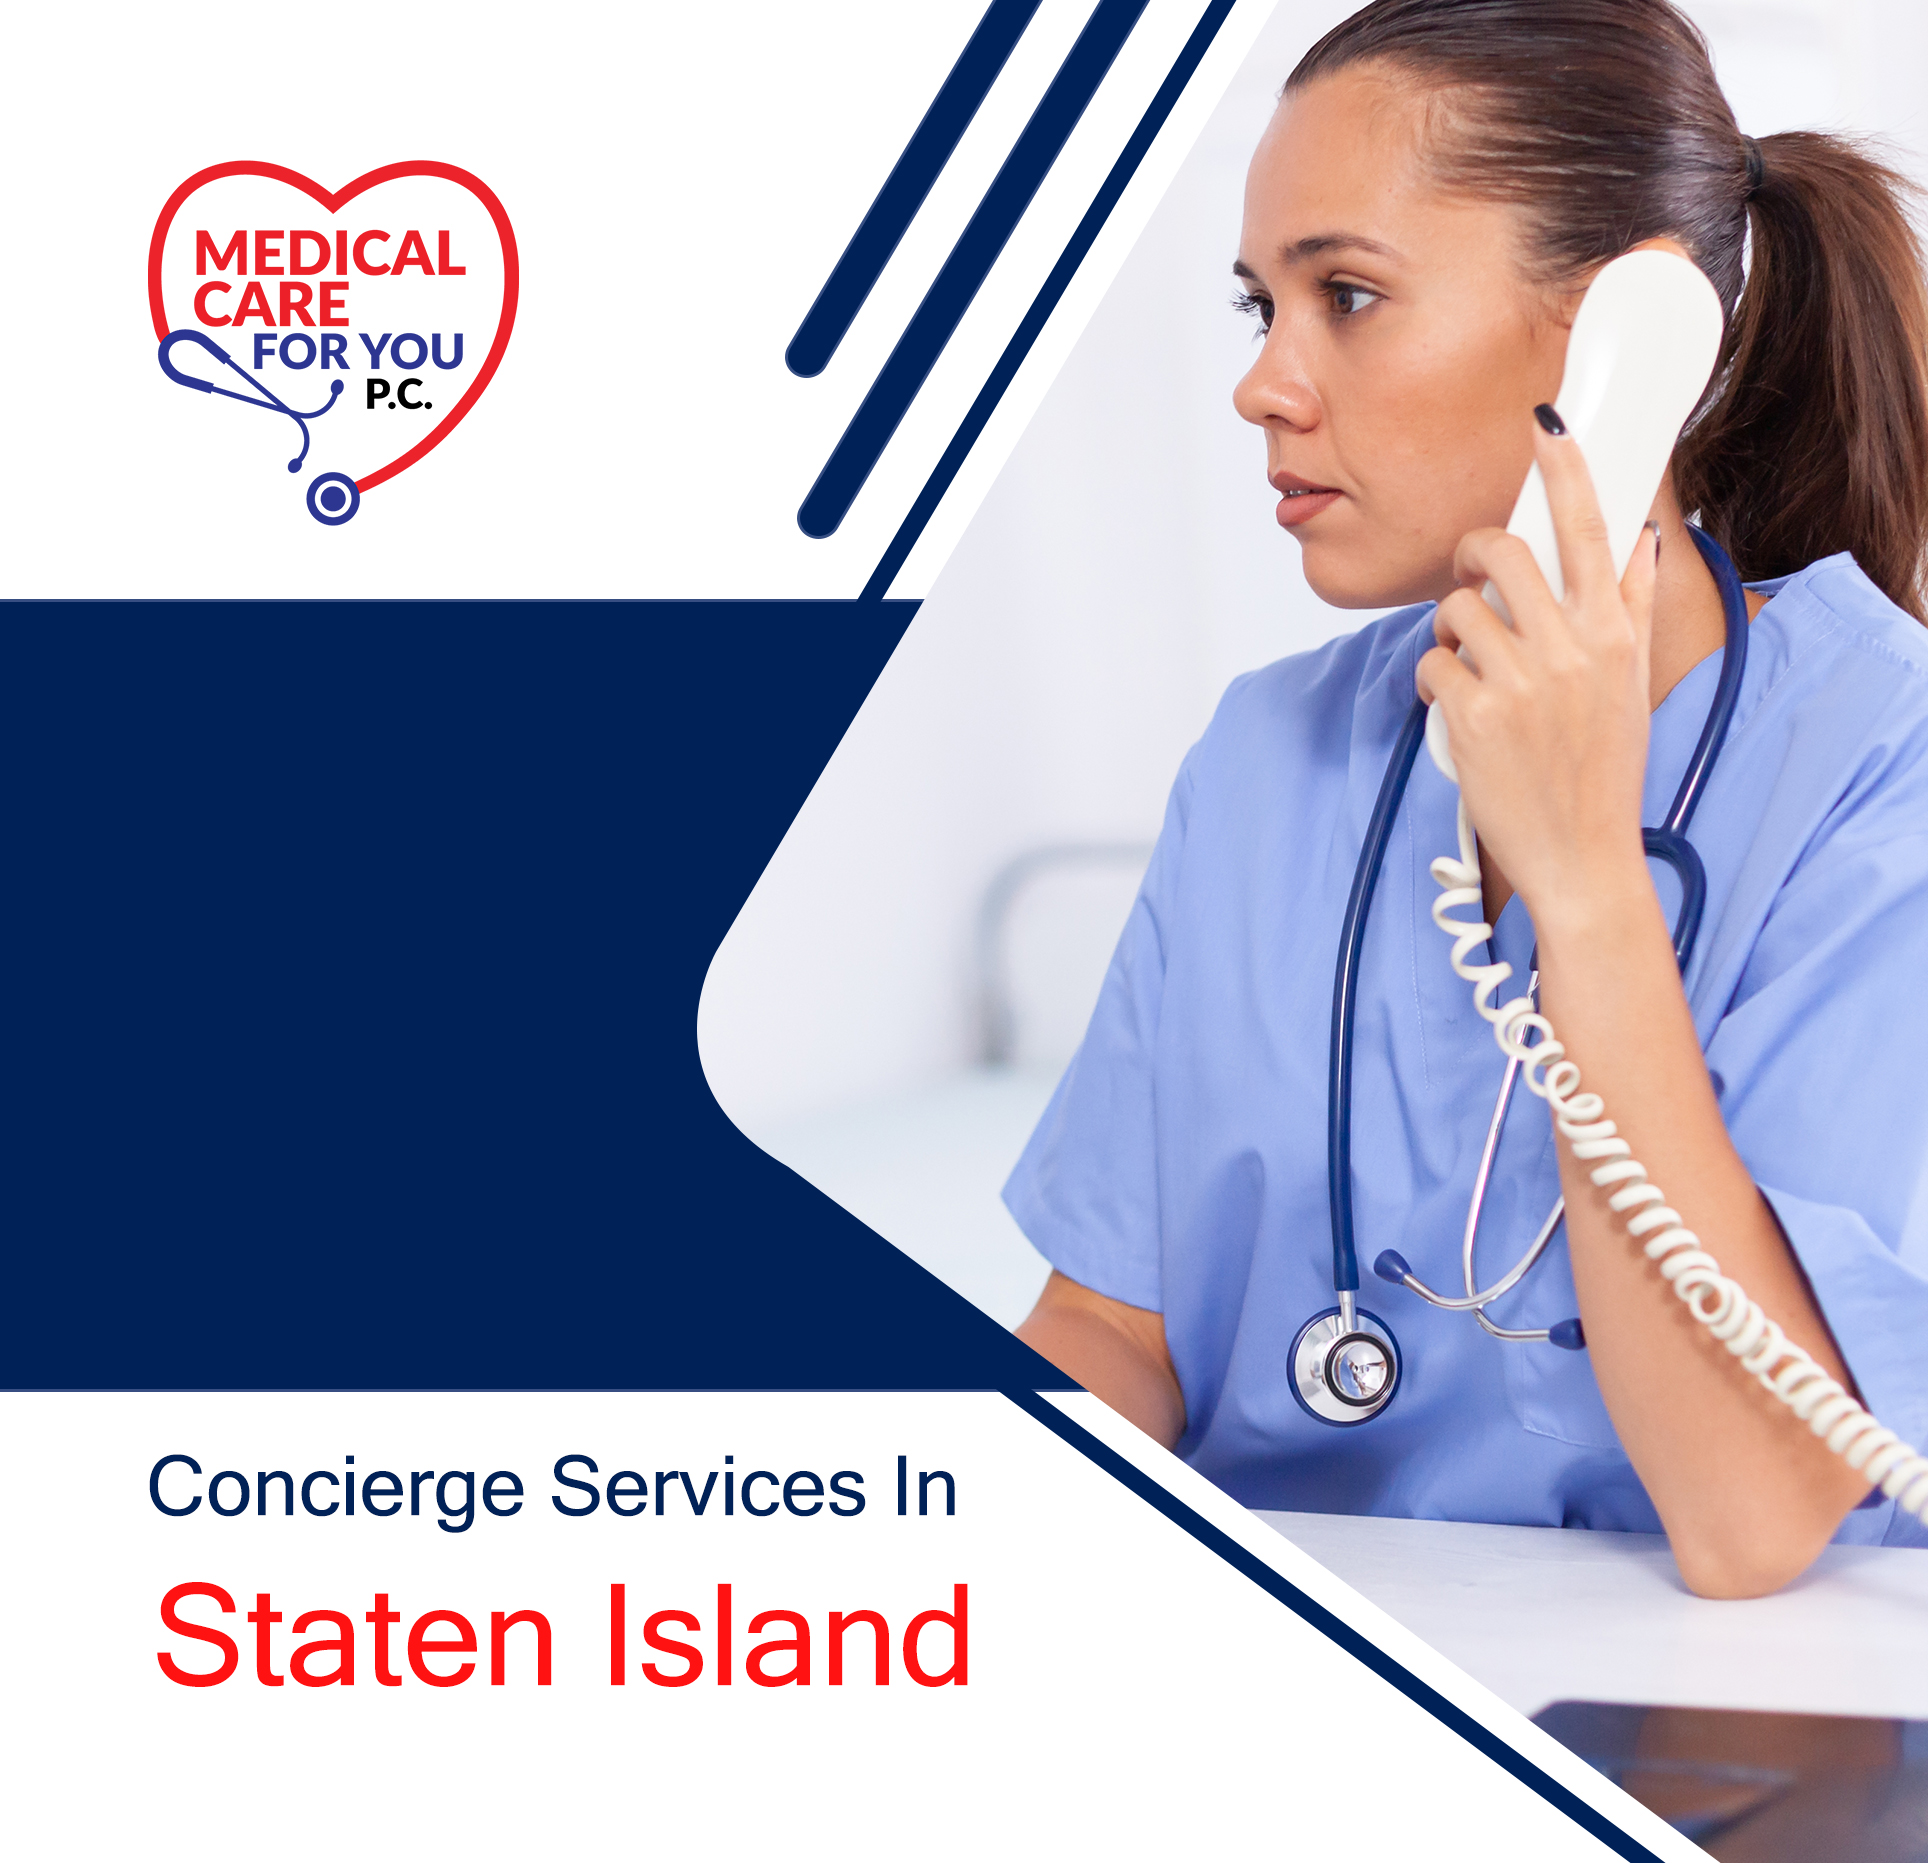 concierge services in staten island medicalcareforyoupc